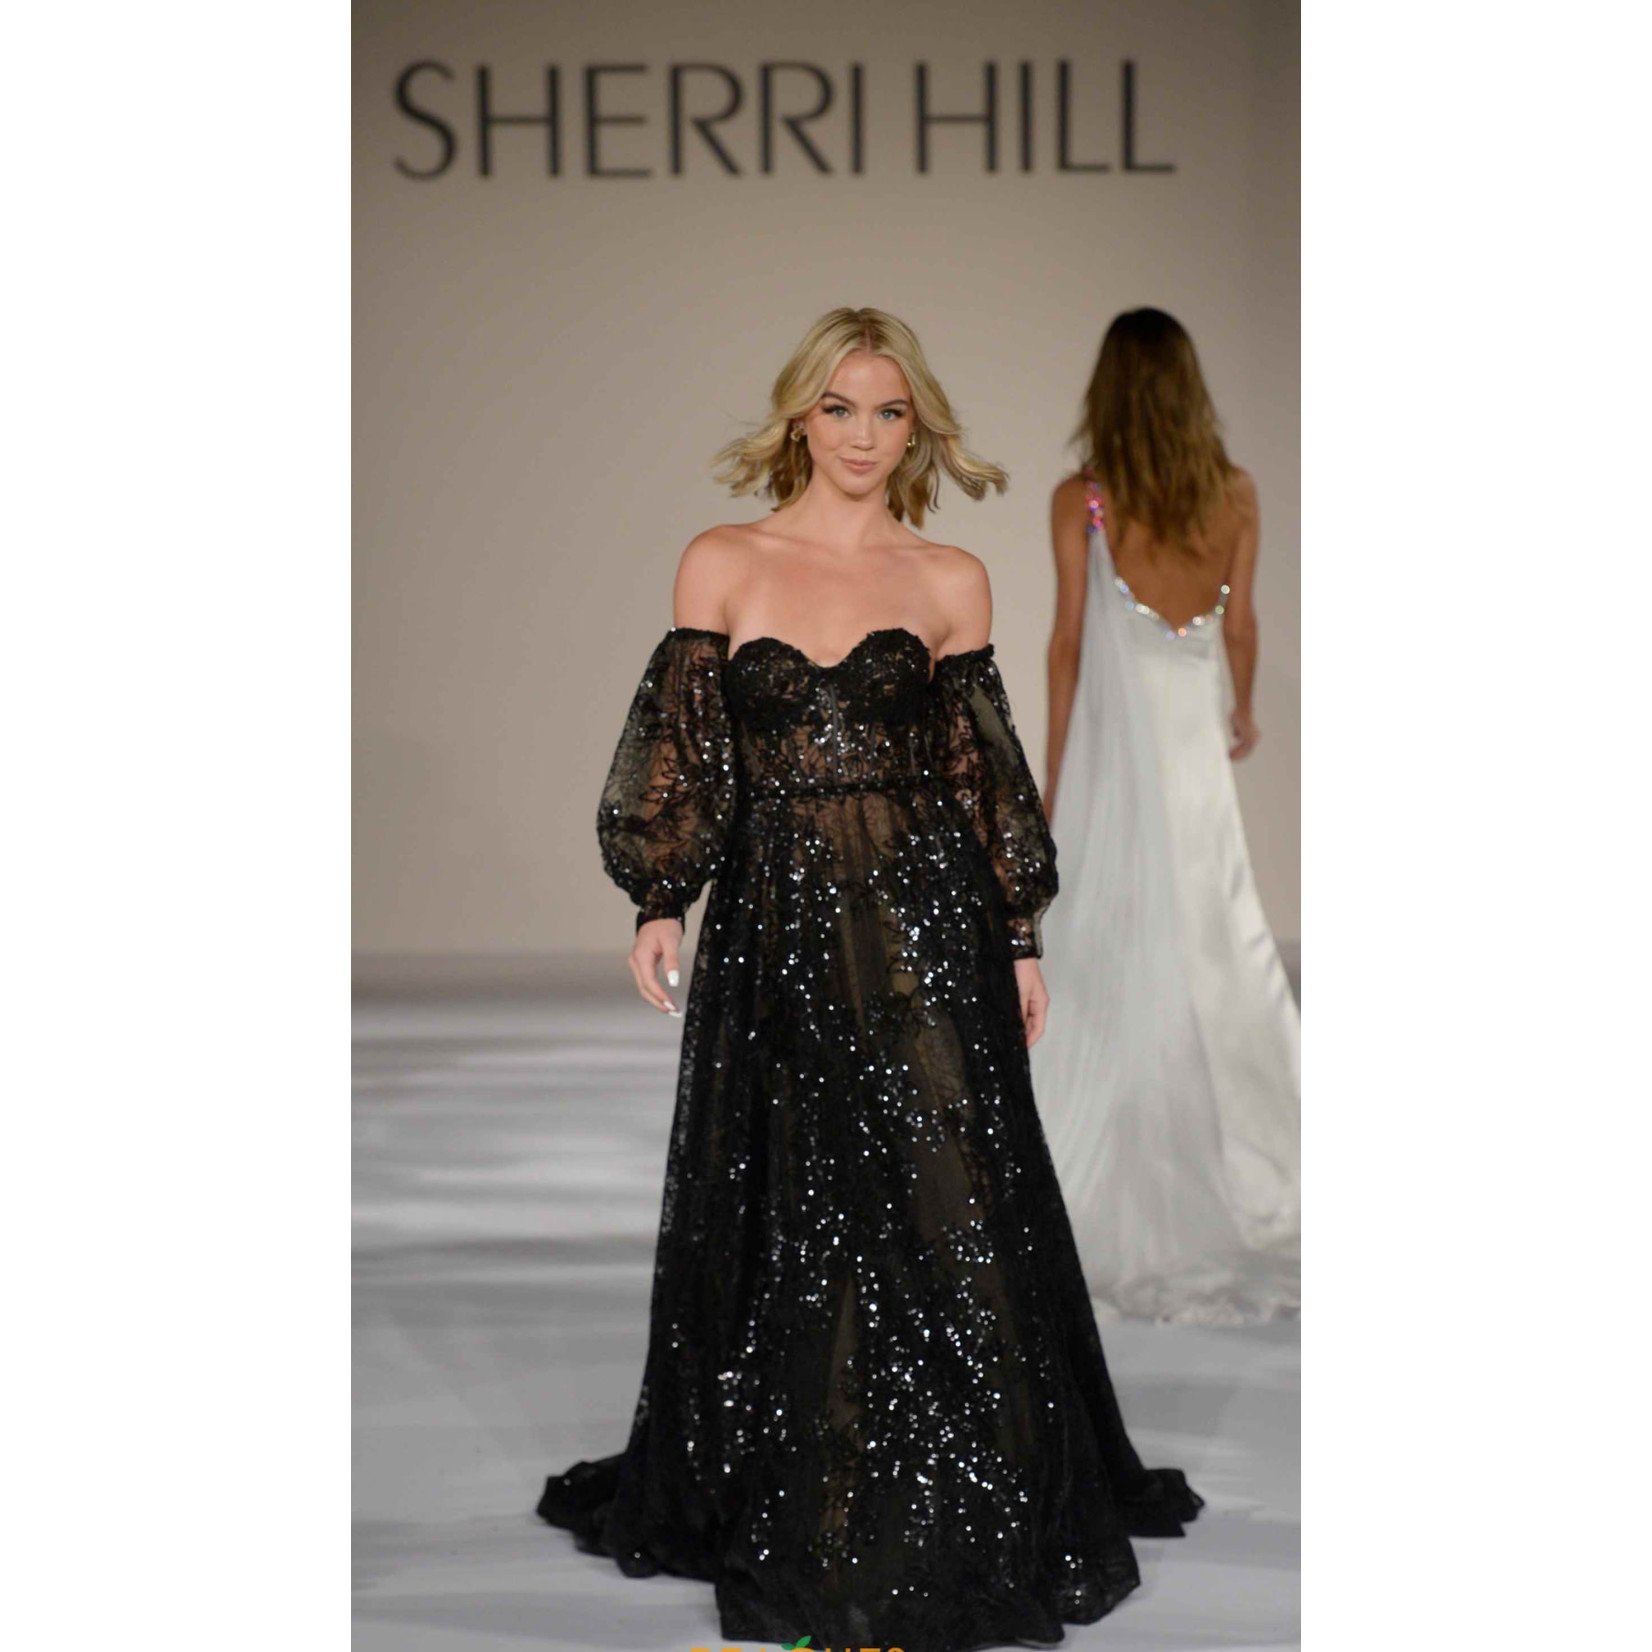 Sherri Hill See-Through Corset Dress 55554 – Terry Costa